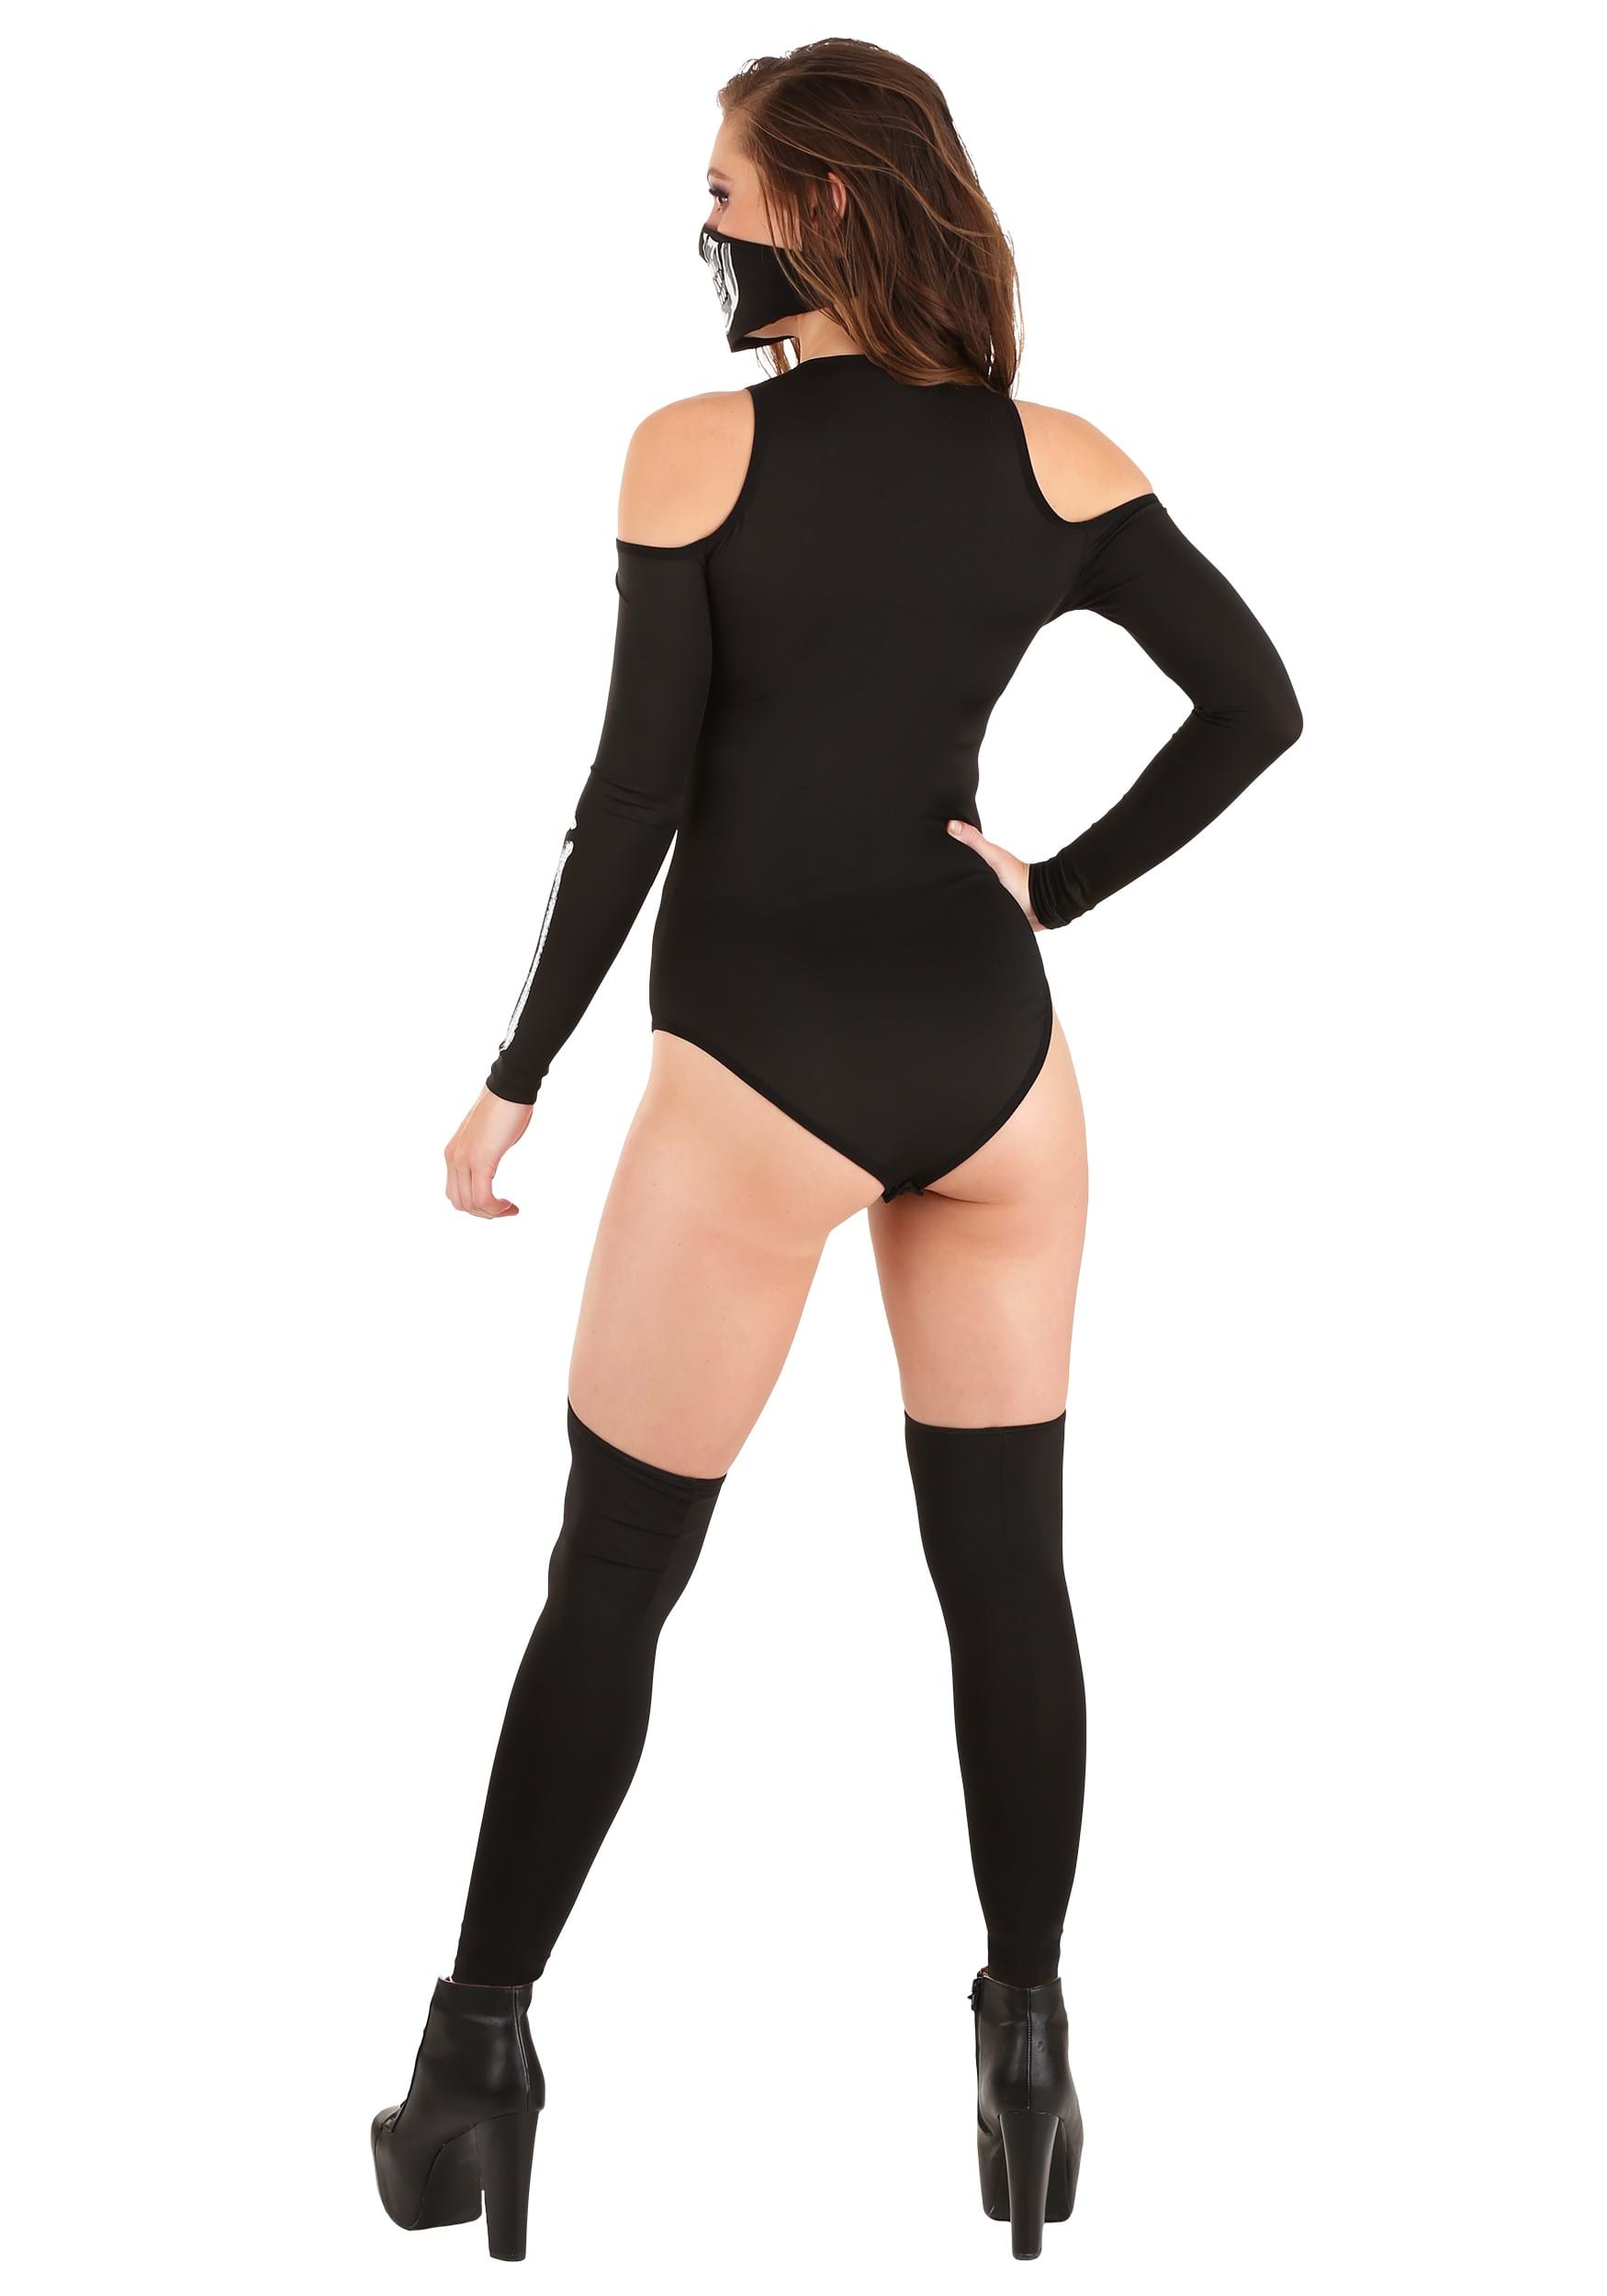 https://images.halloweencostumes.ca/products/46422/2-1-167693/skeleton-bodysuit-womens-costume.jpg